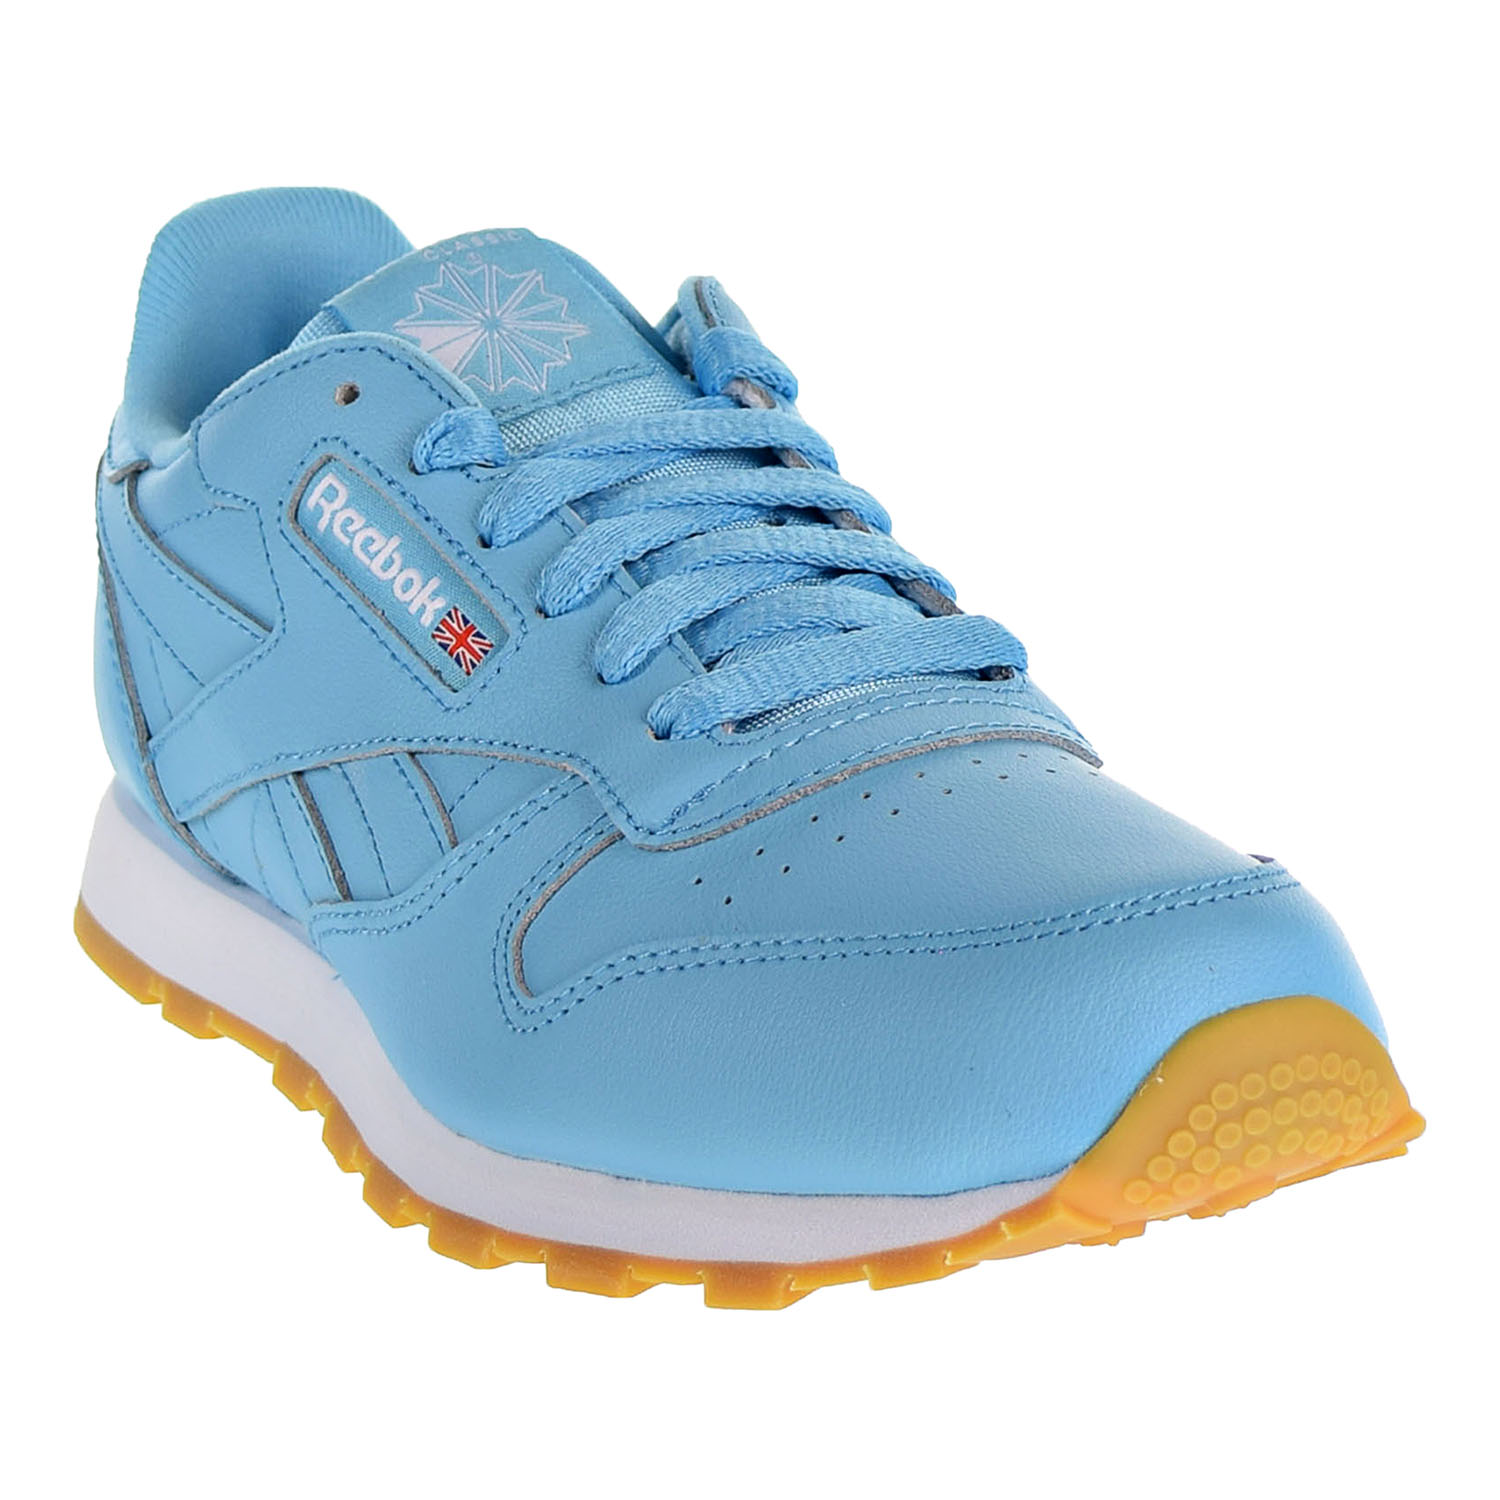 Reebok Classic Leather Gum Boys Shoes Crisp Blue/White/Gum cn4095 - image 2 of 6